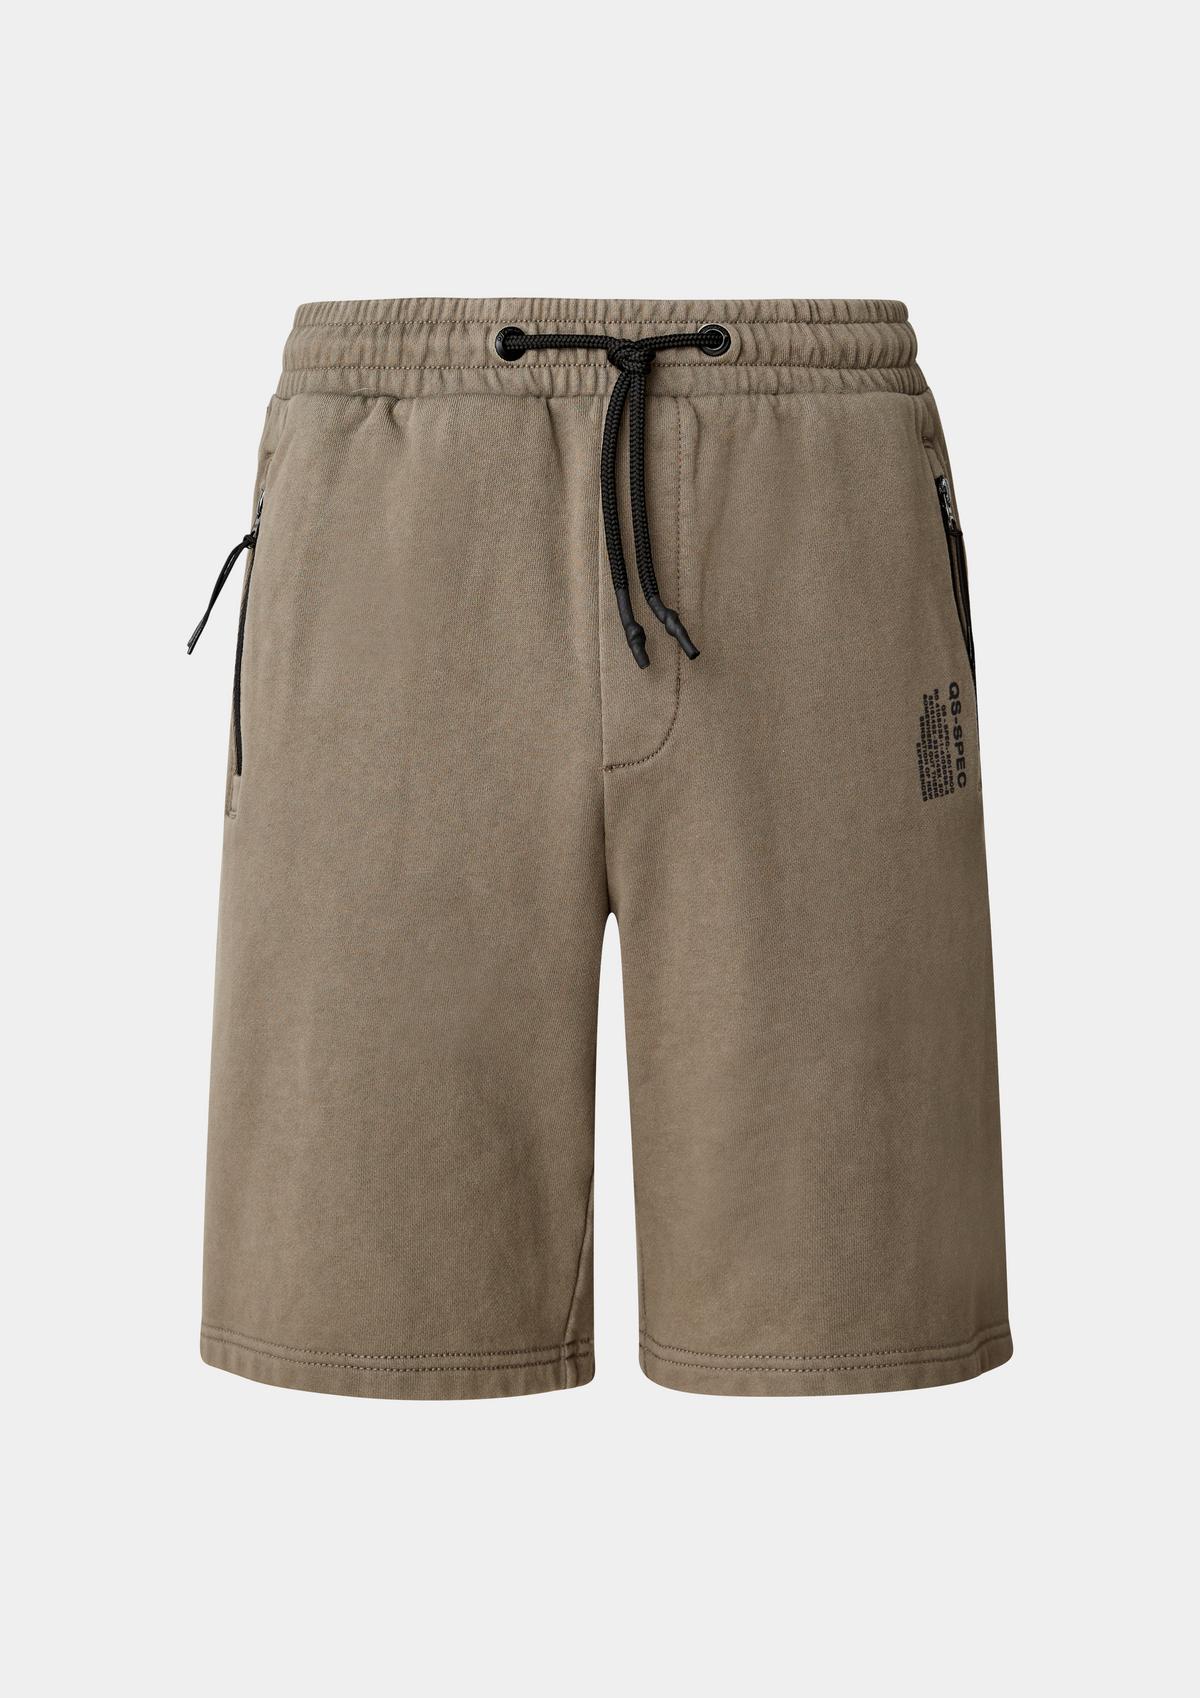 s.Oliver Regular fit: sweatshirt-style shorts